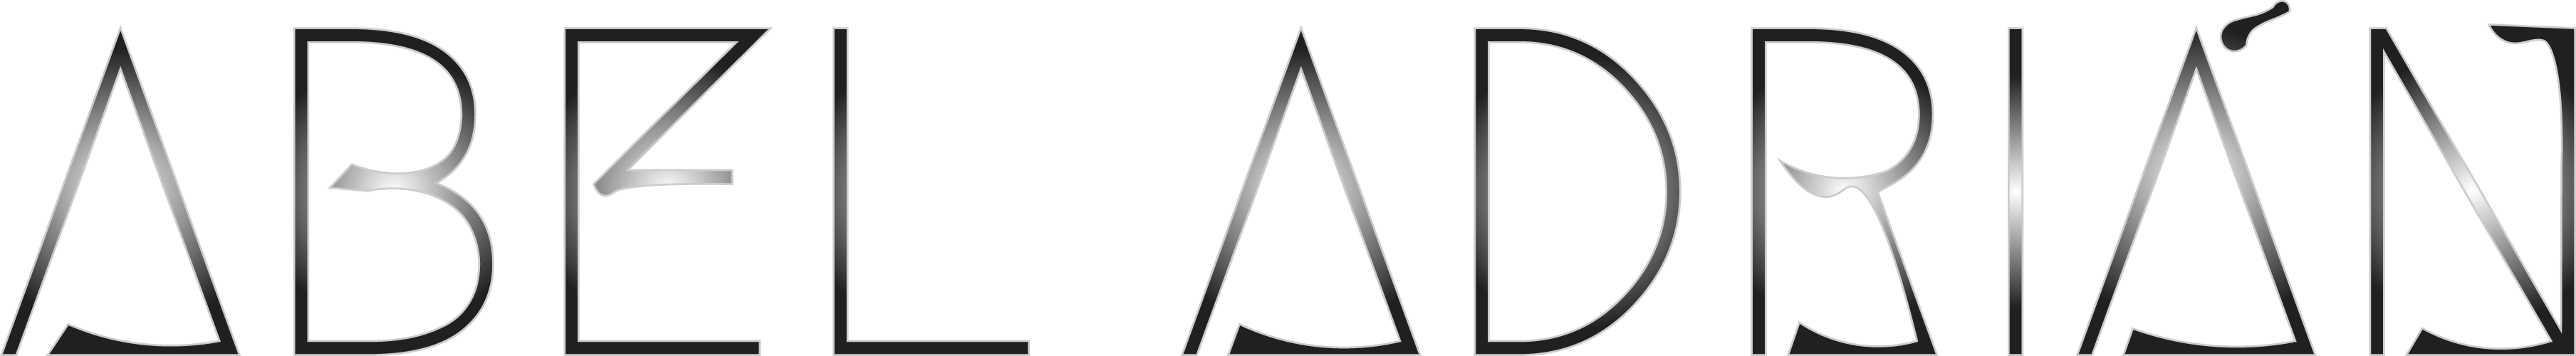 ABELADRIAN ART Logo